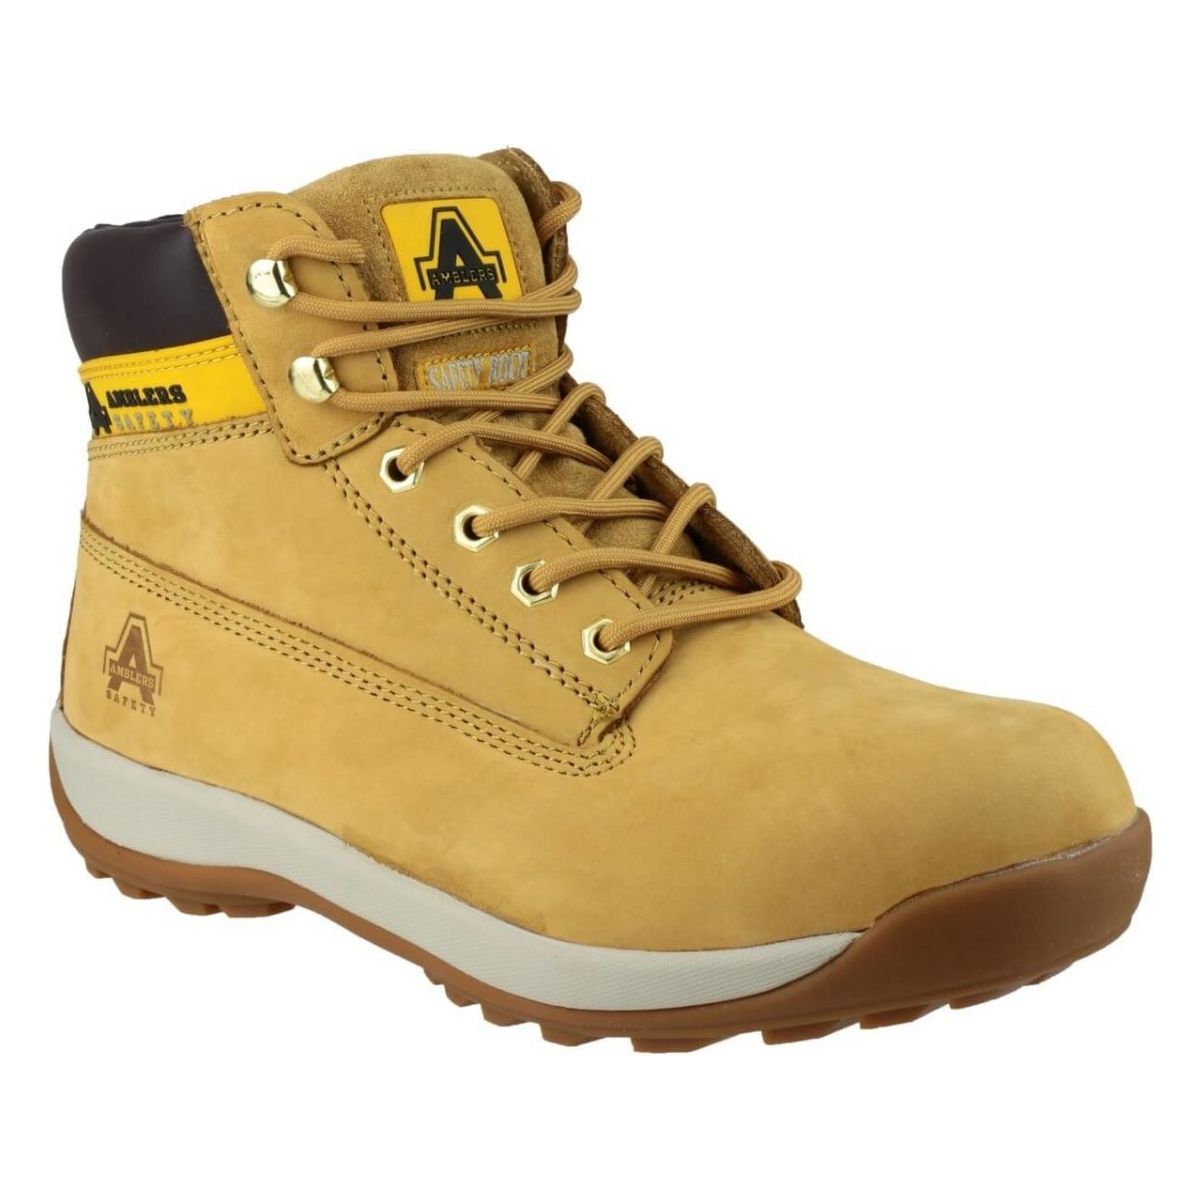 Amblers Fs102 Safety Boots Mens - workweargurus.com